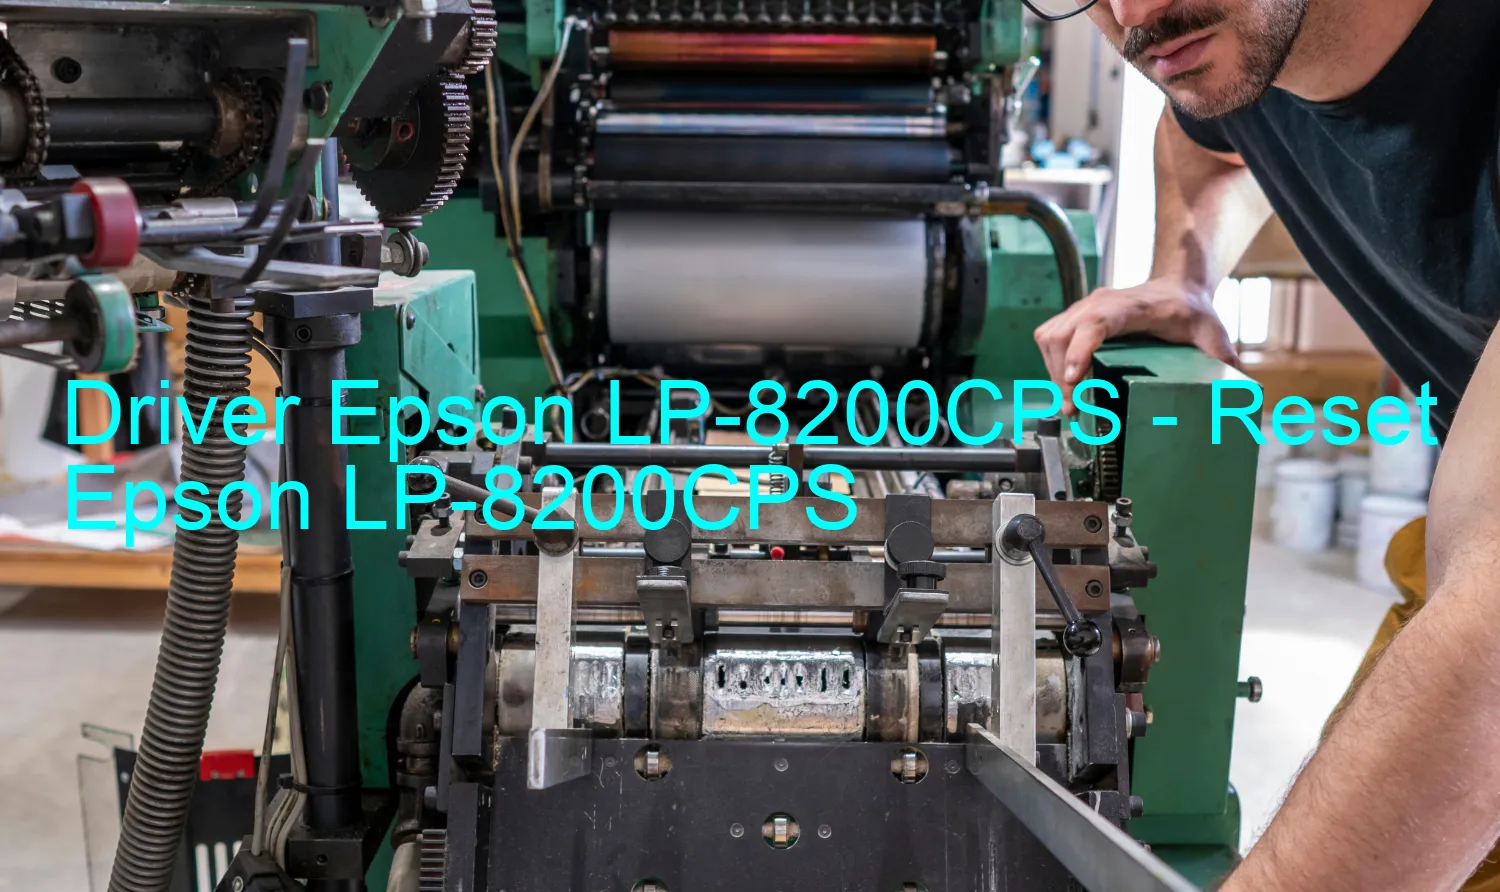 Epson LP-8200CPSのドライバー、Epson LP-8200CPSのリセットソフトウェア